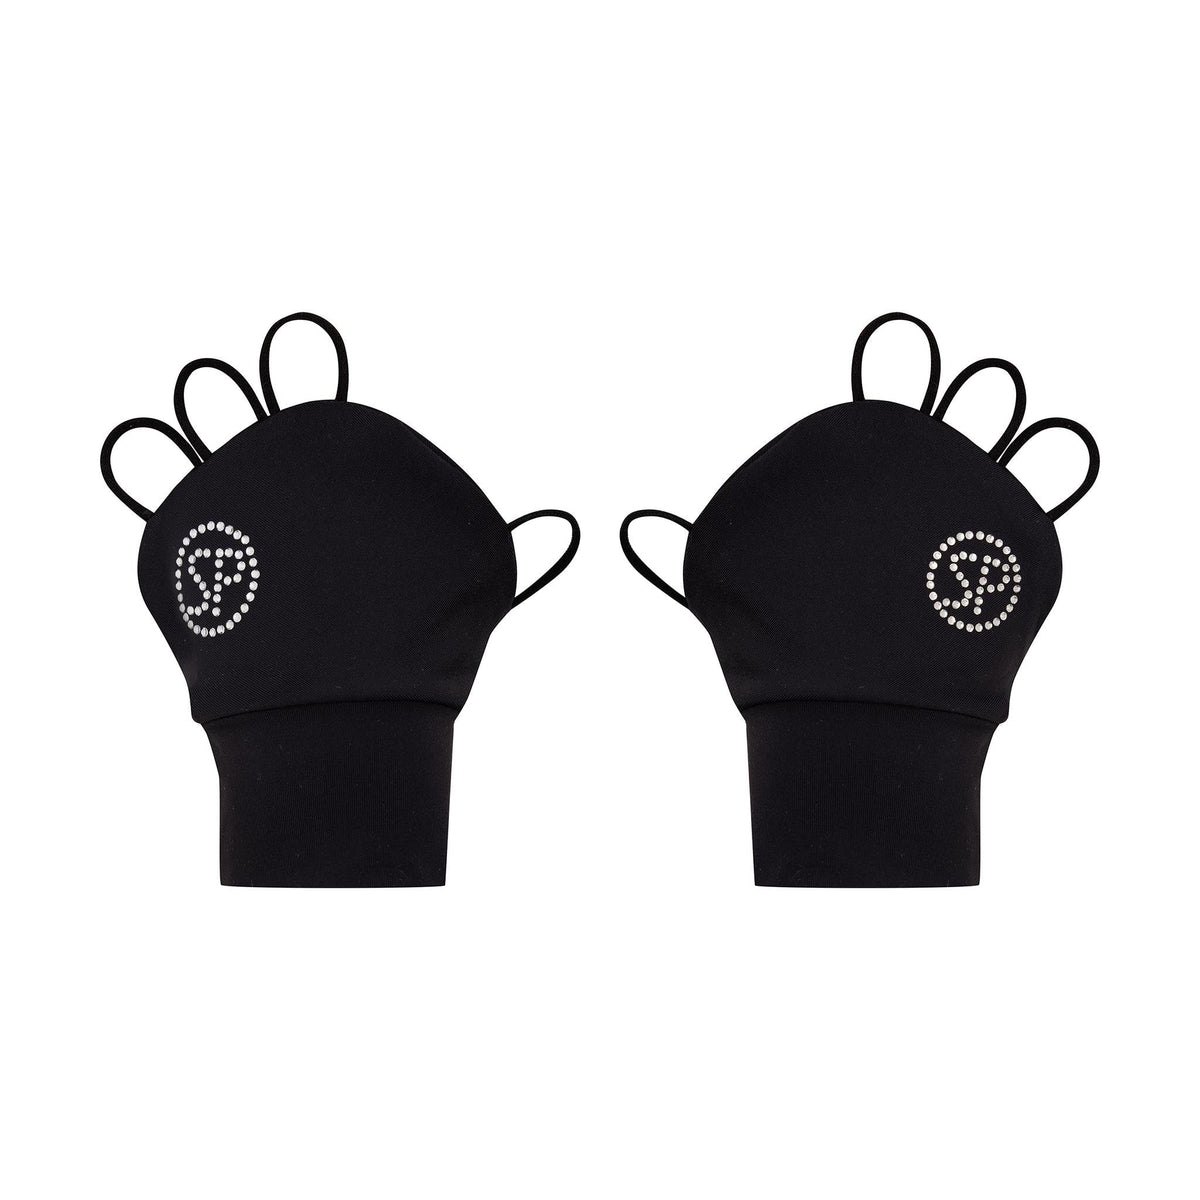 SP Glove (Palmless sun glove) - Crystal logo [Black] - SParms